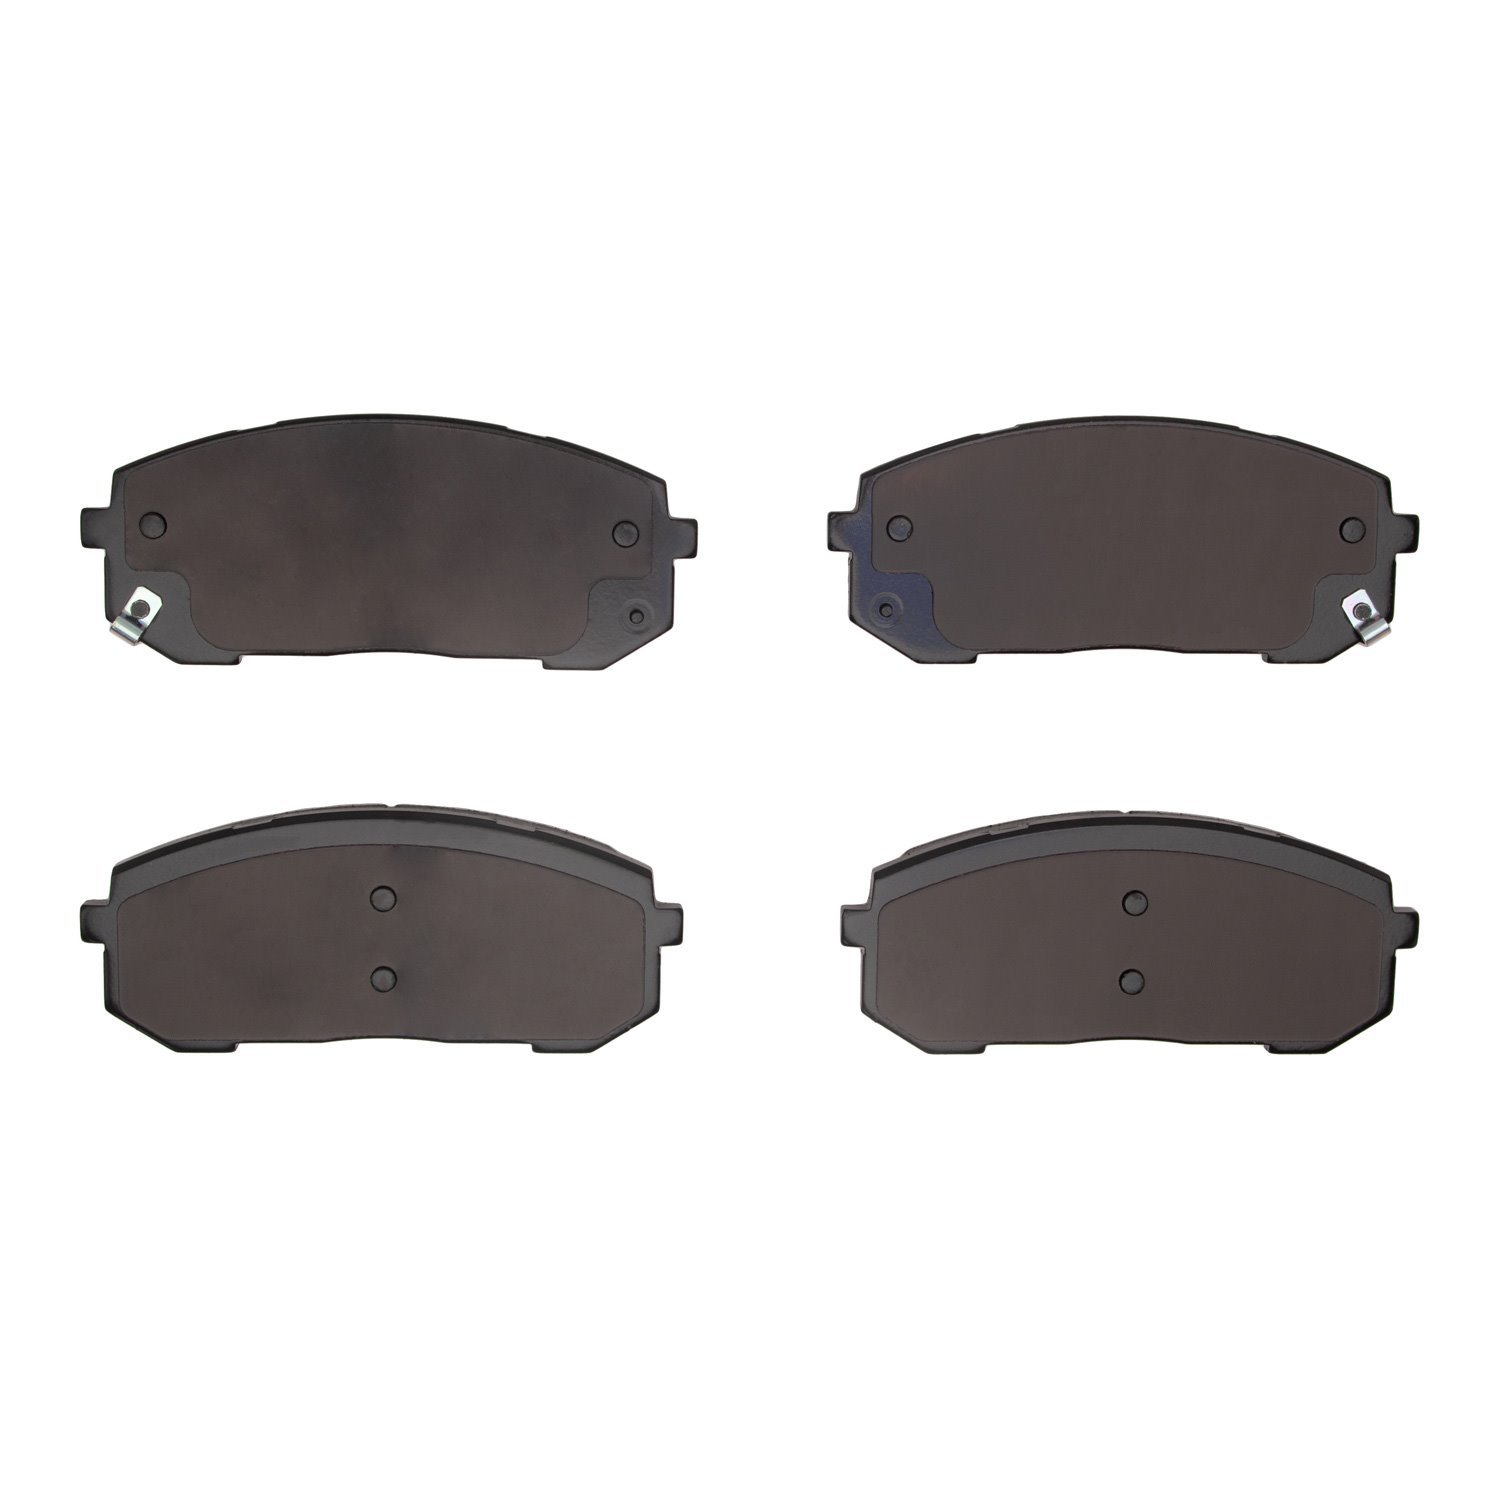 5000 Advanced Ceramic Brake Pads, Fits Select Kia/Hyundai/Genesis